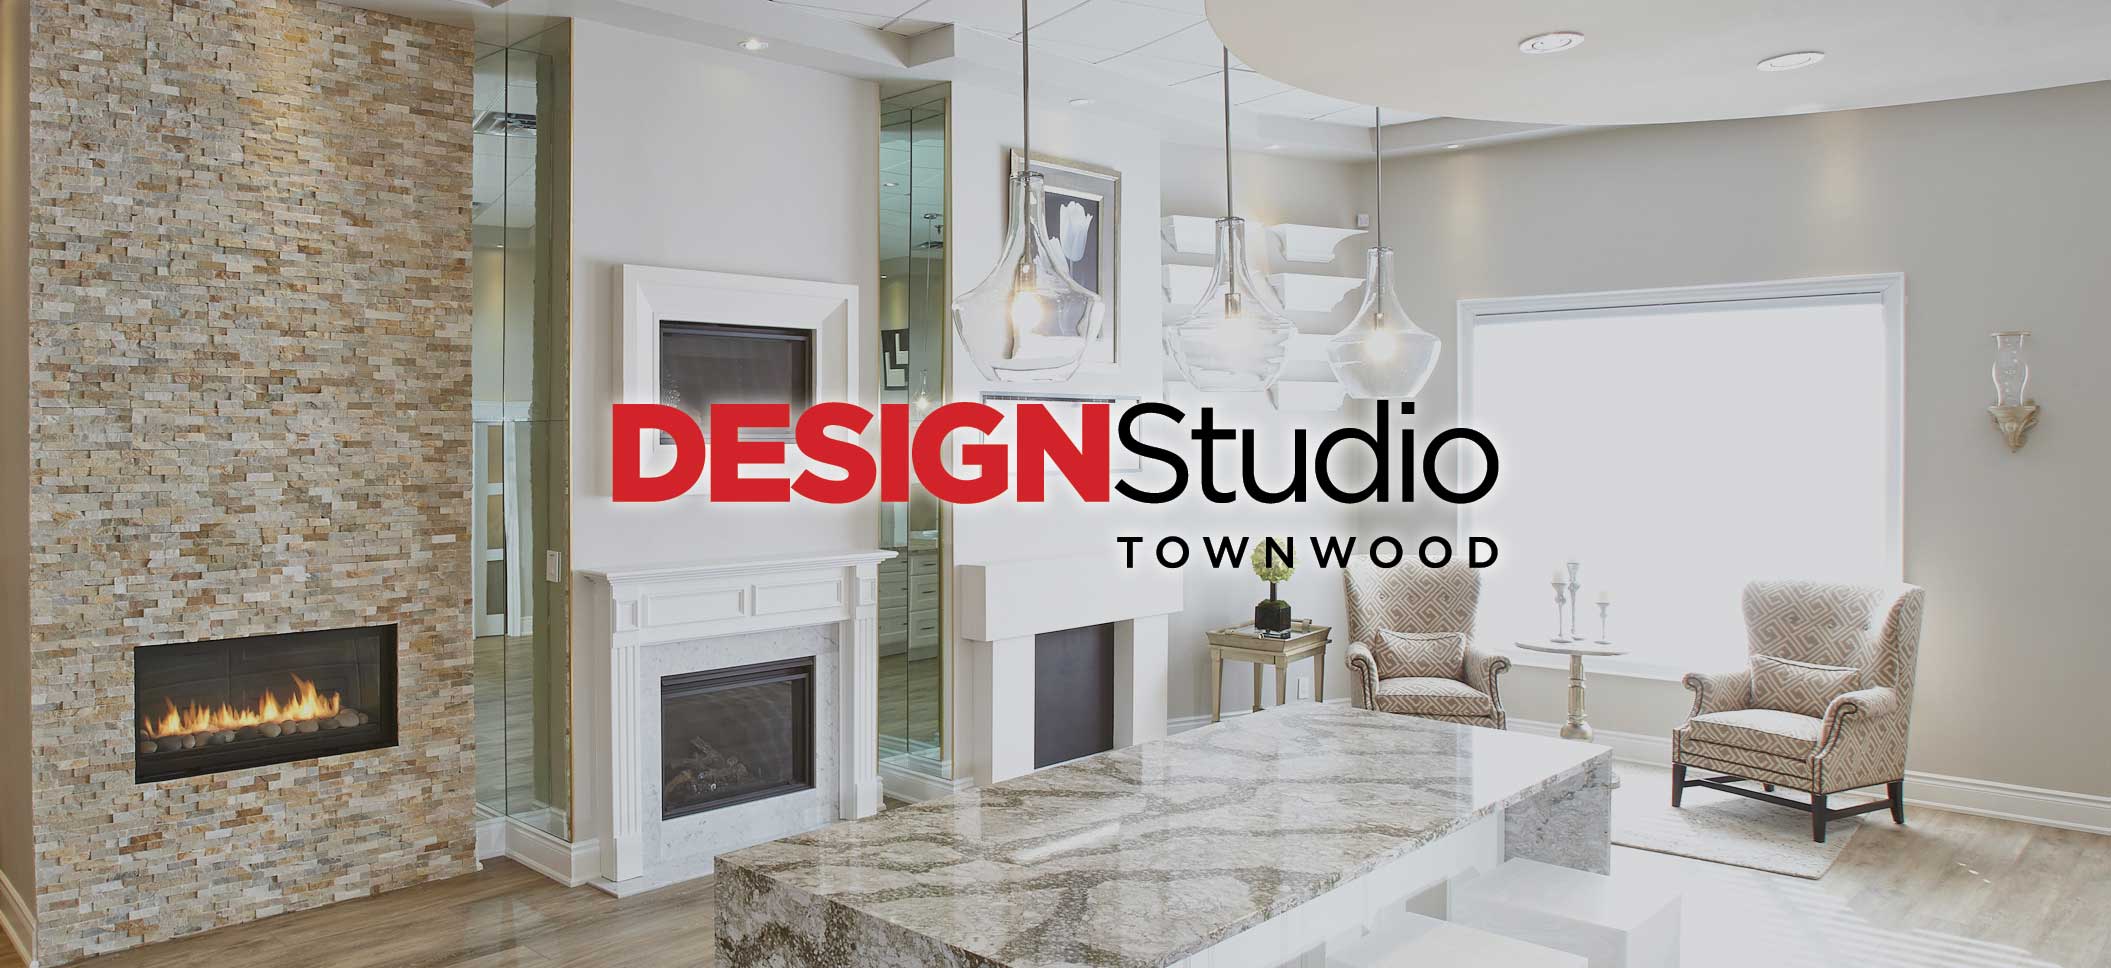 Design Studio Townwood